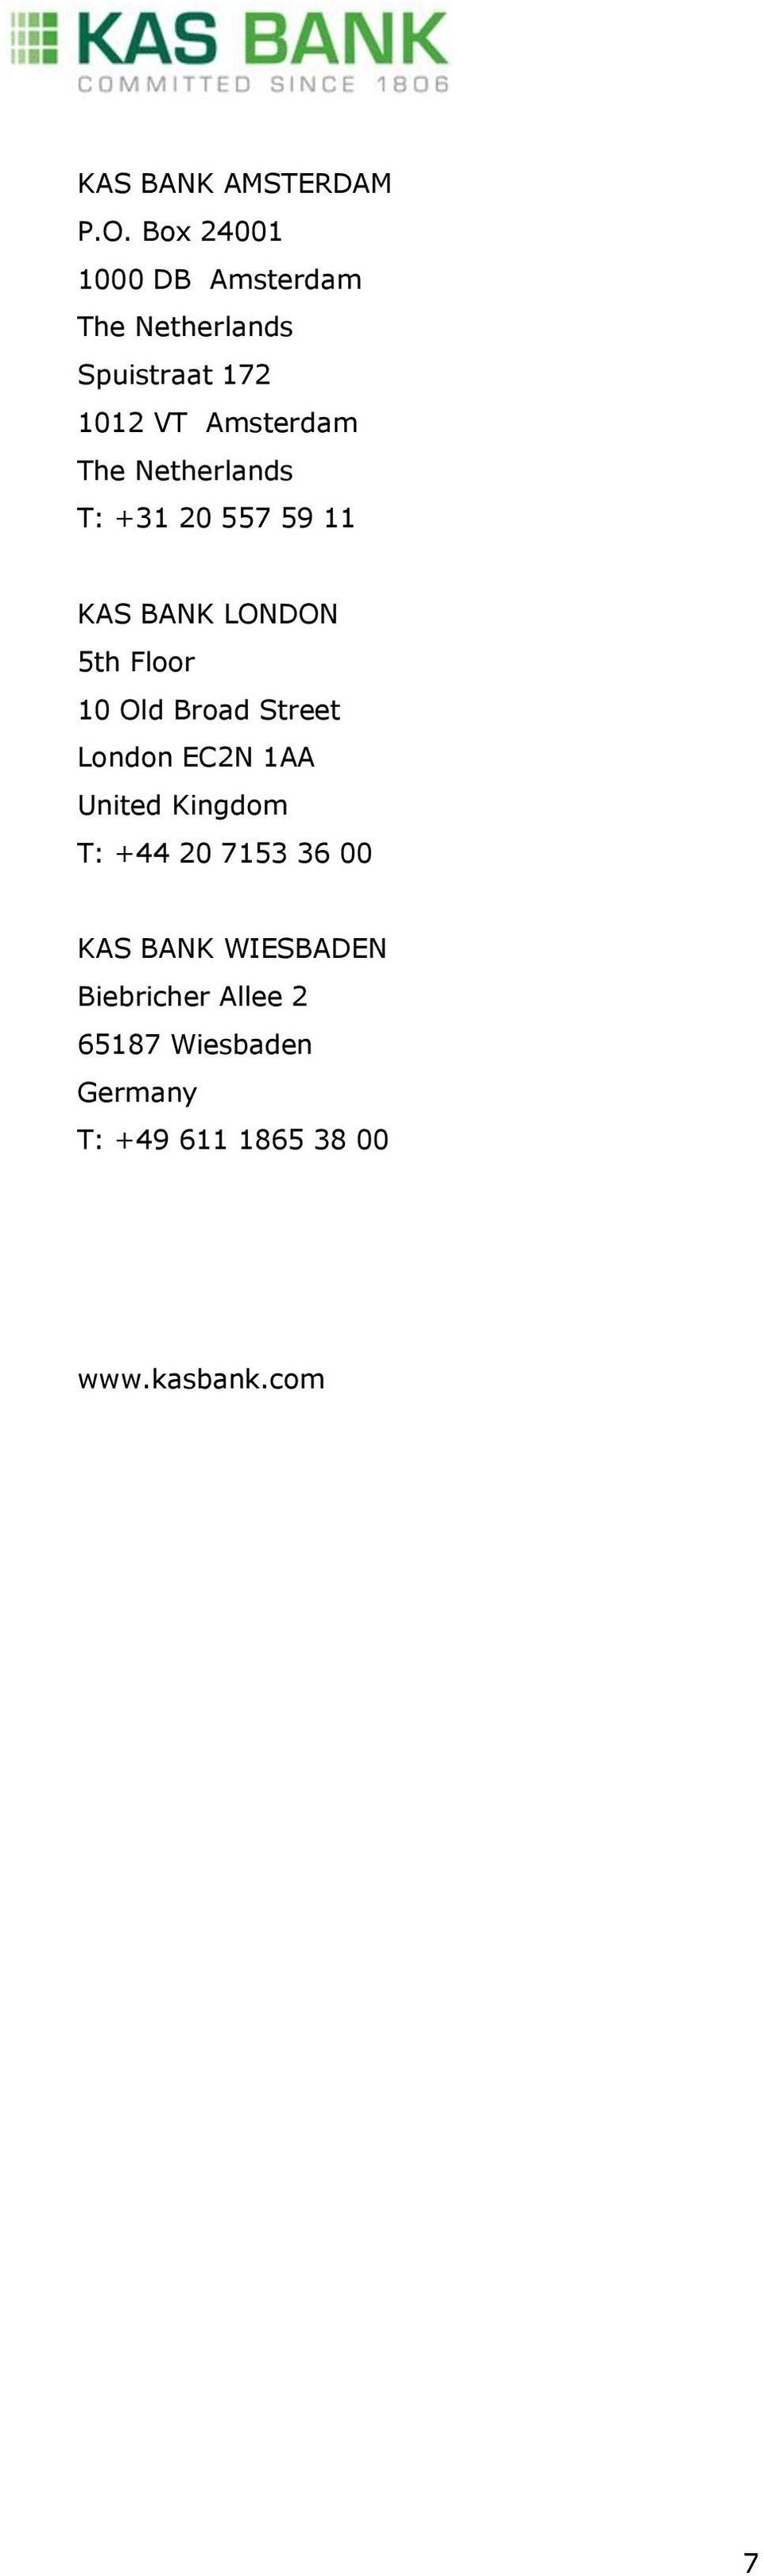 Netherlands T: +31 20 557 59 11 KAS BANK LONDON 5th Floor 10 Old Broad Street